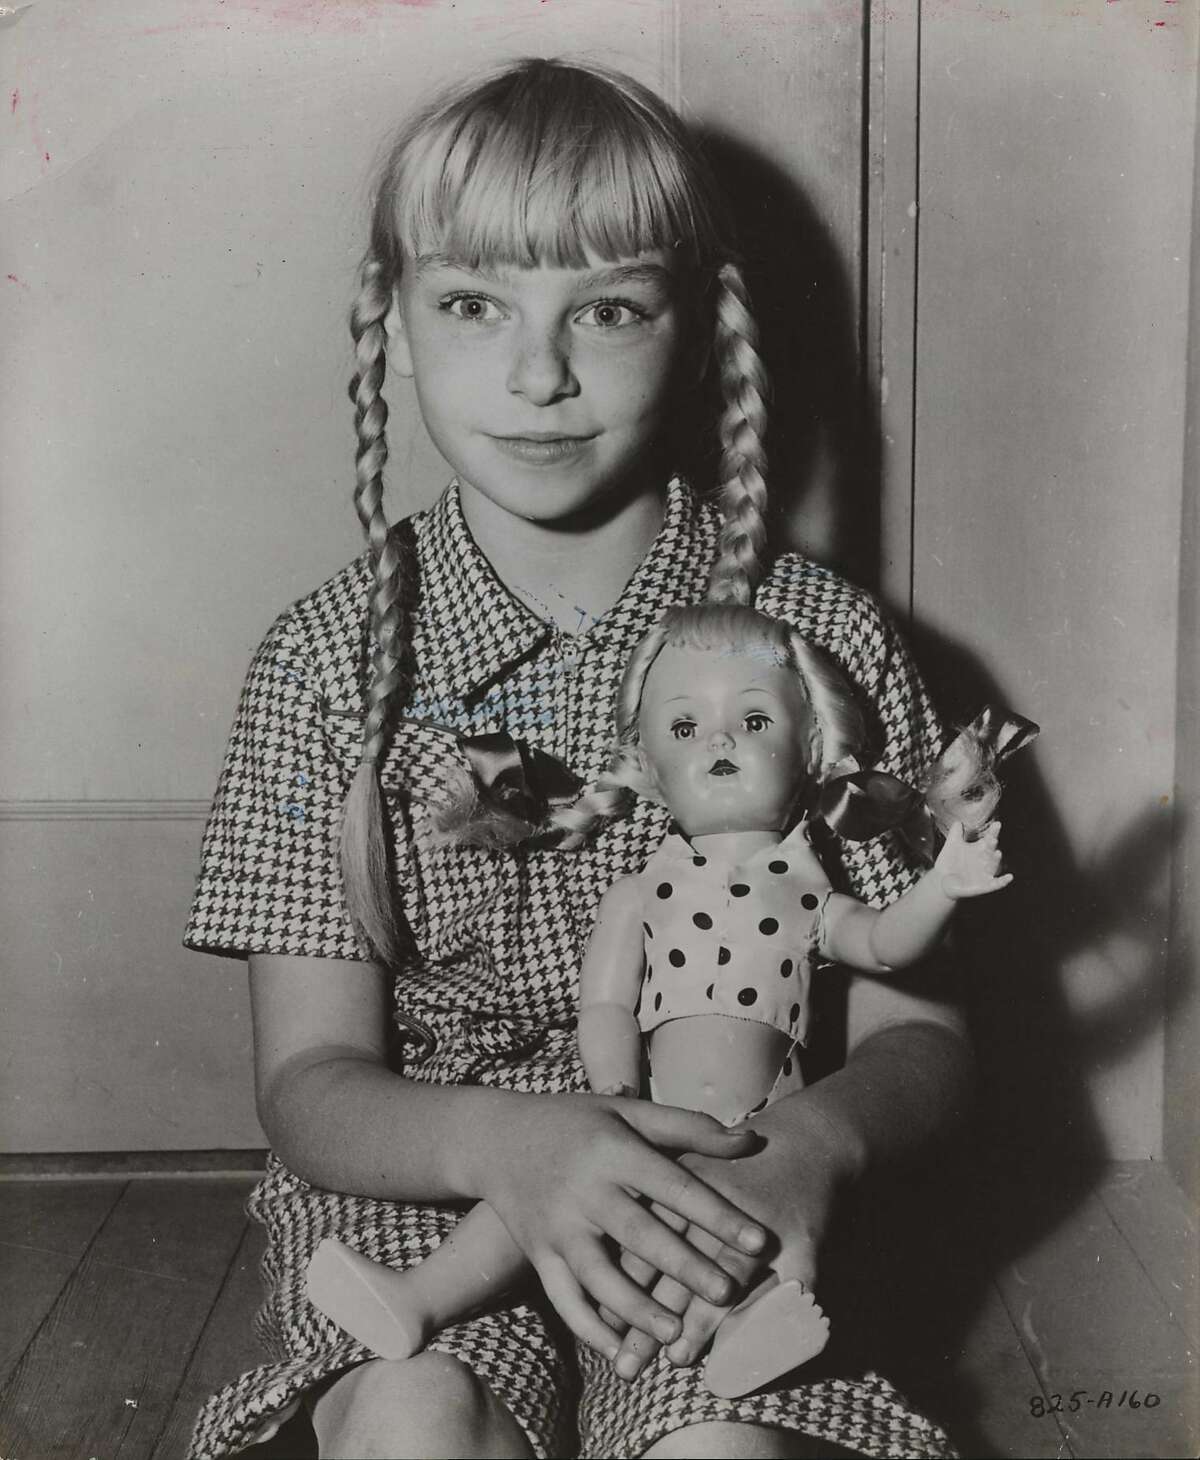 Patty McCormack, child actress. Sept. 16, 1956 file photo